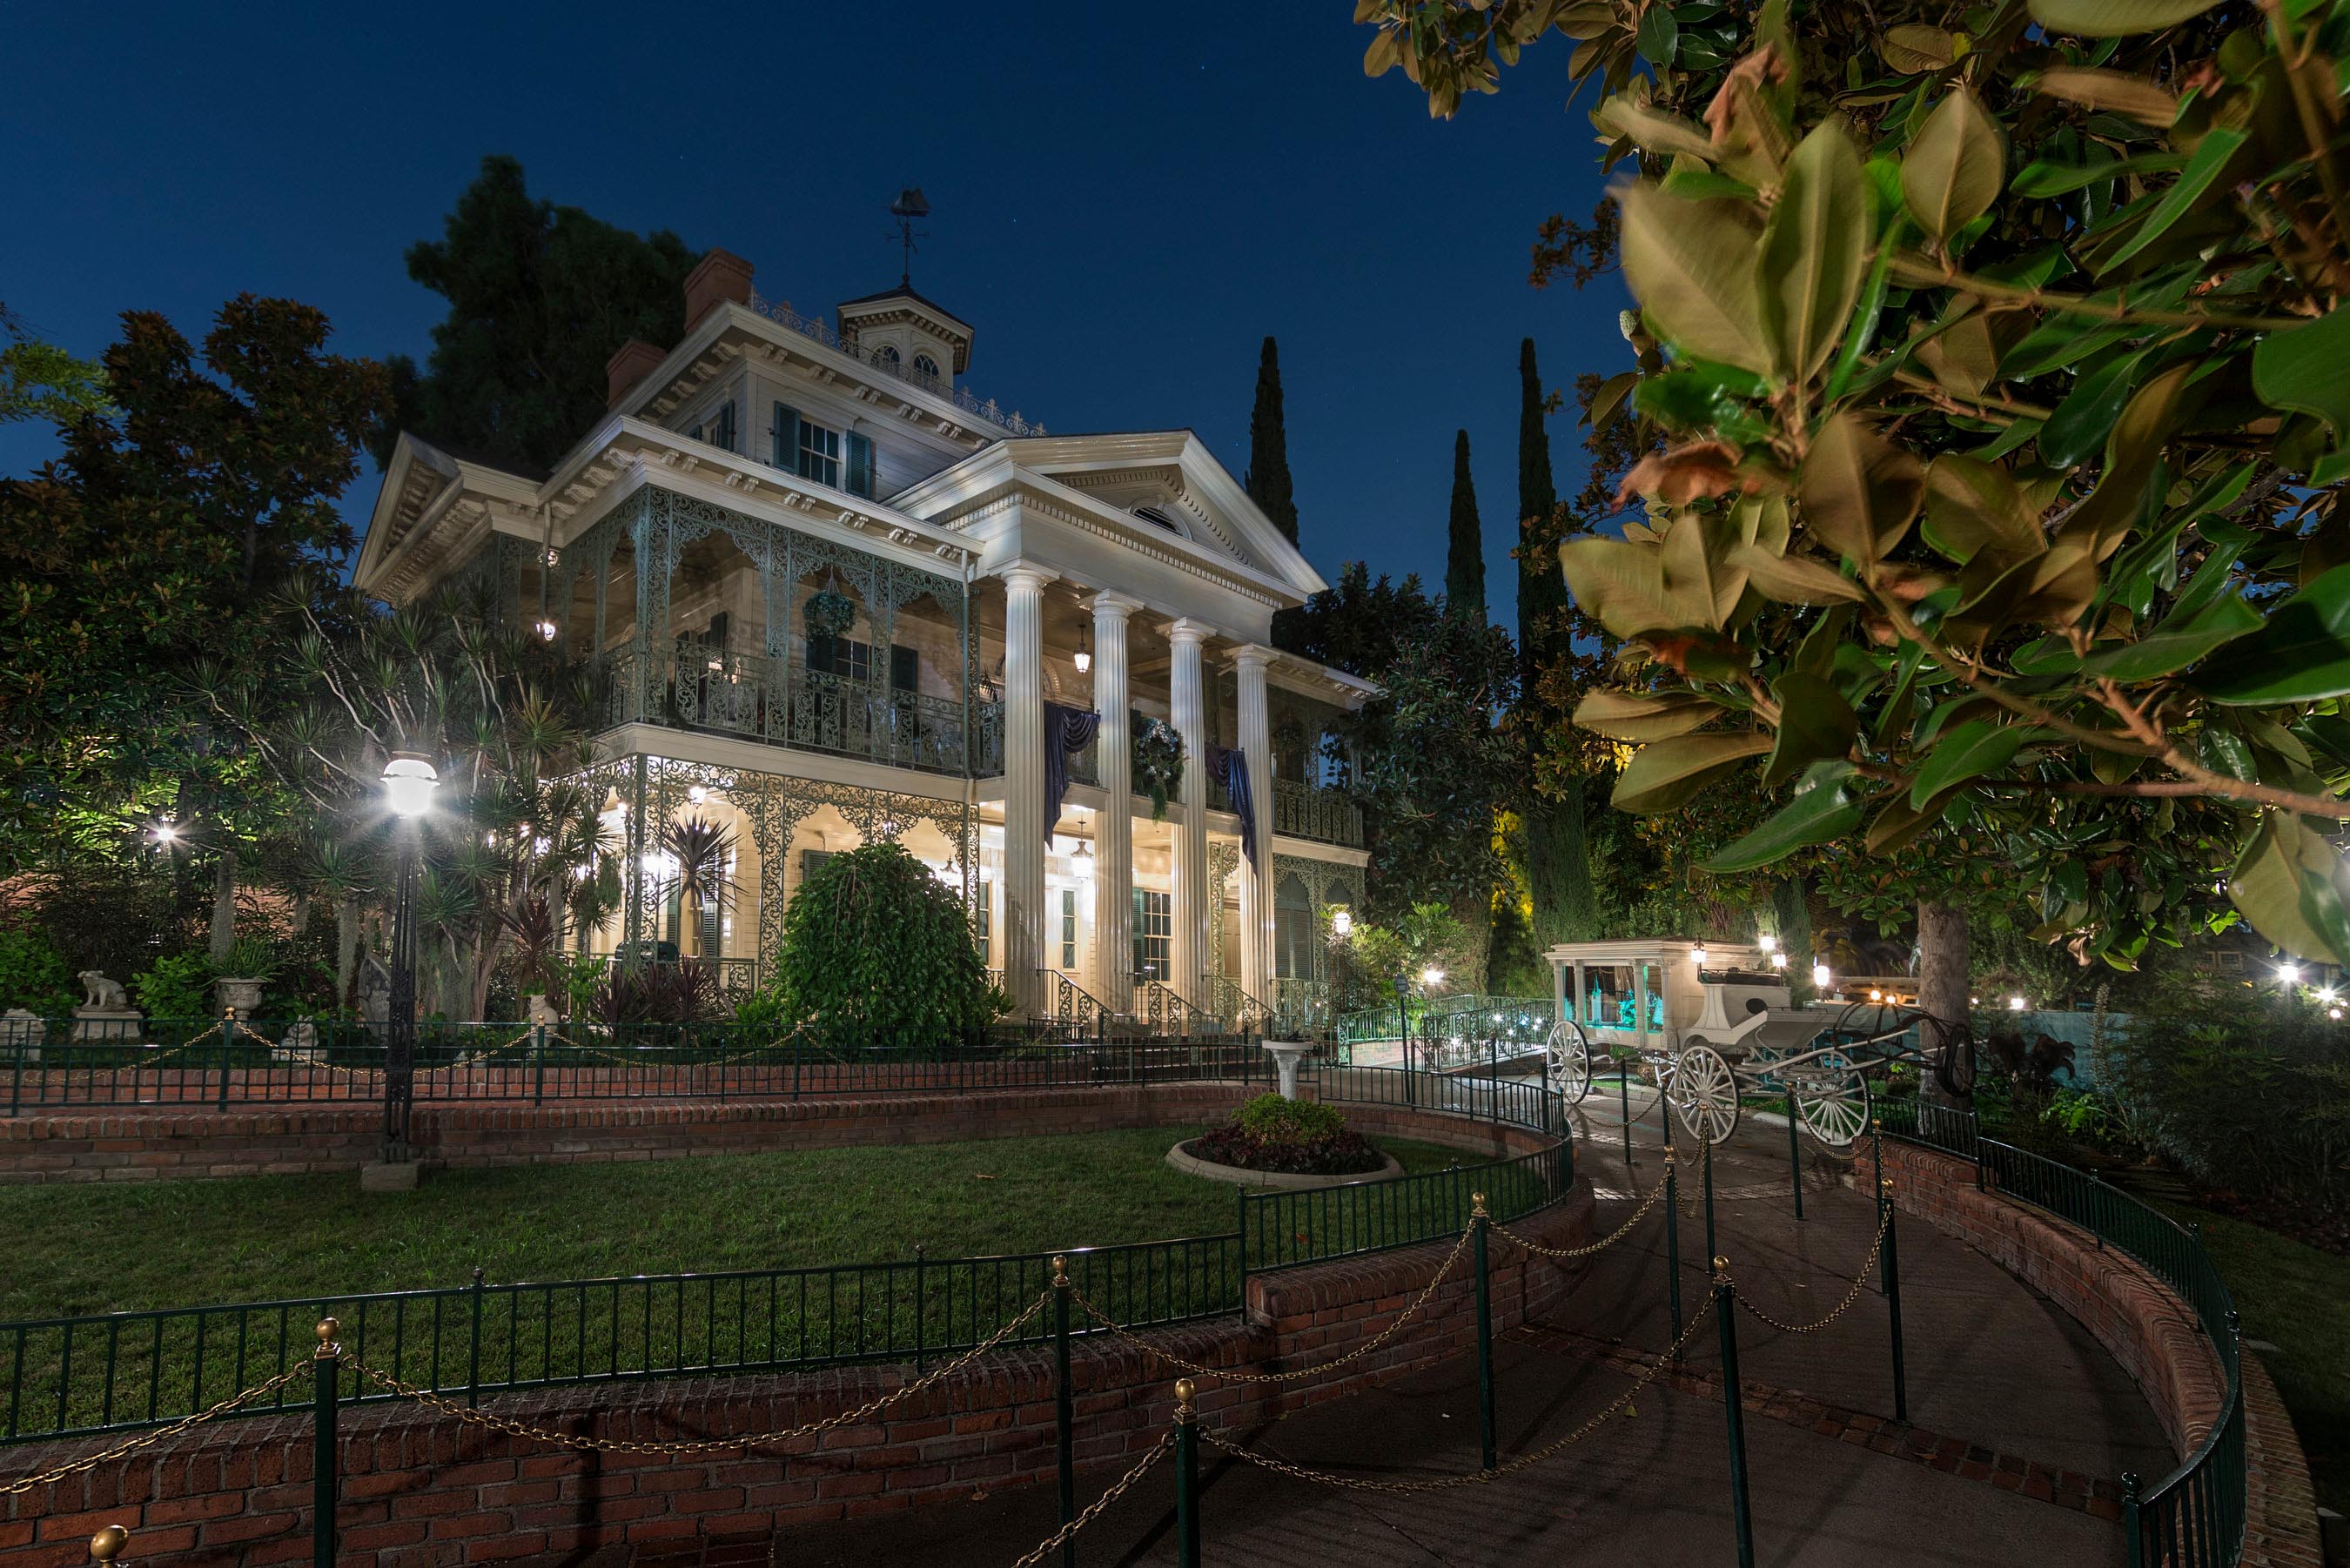 Haunted Mansion at Disneyland to Undergo Multiple Month Refurbishment in 2020